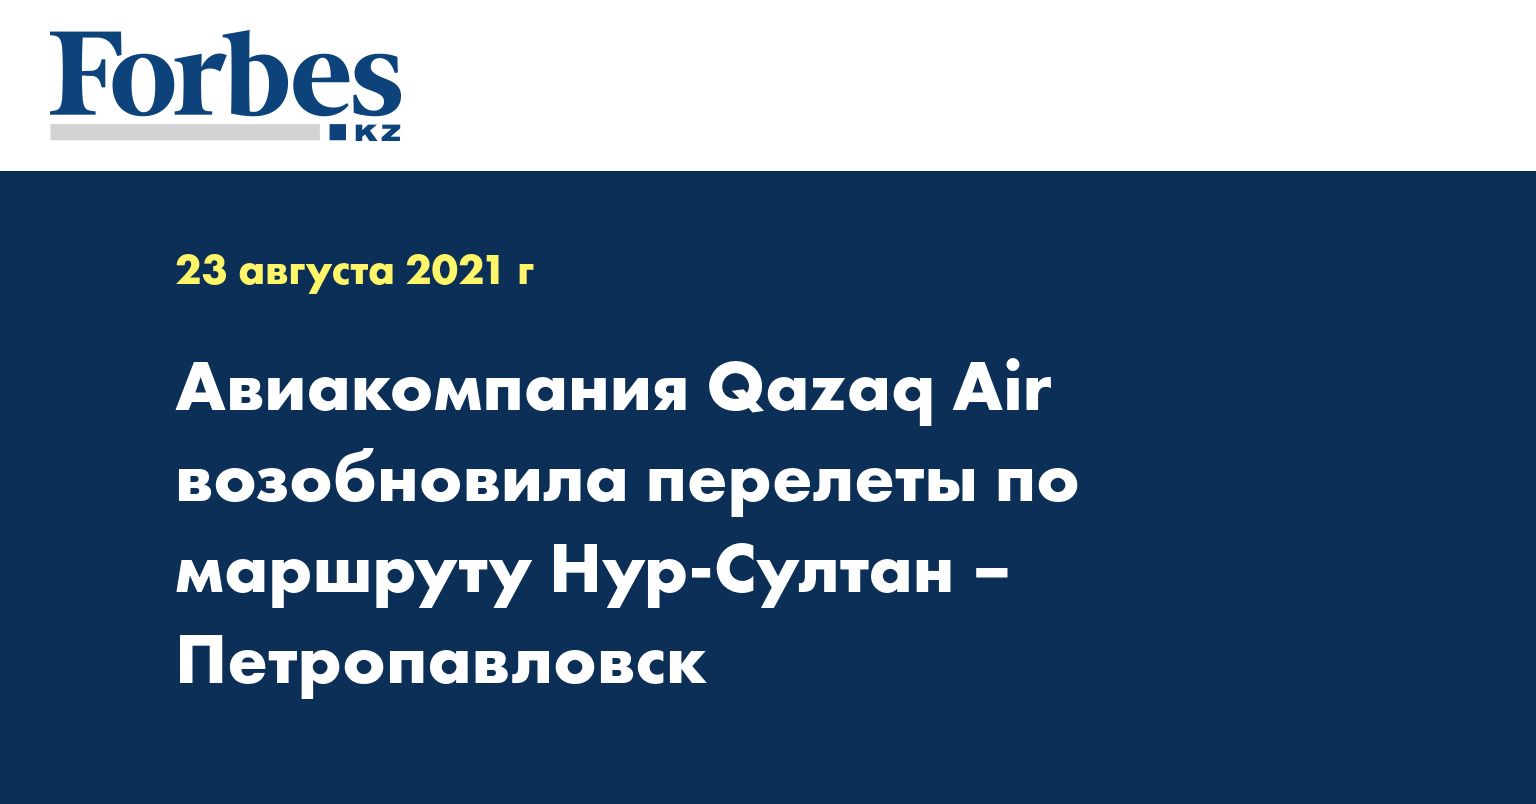 Авиакомпания Qazaq Air возобновила перелеты по маршруту Нур-Султан – Петропавловск